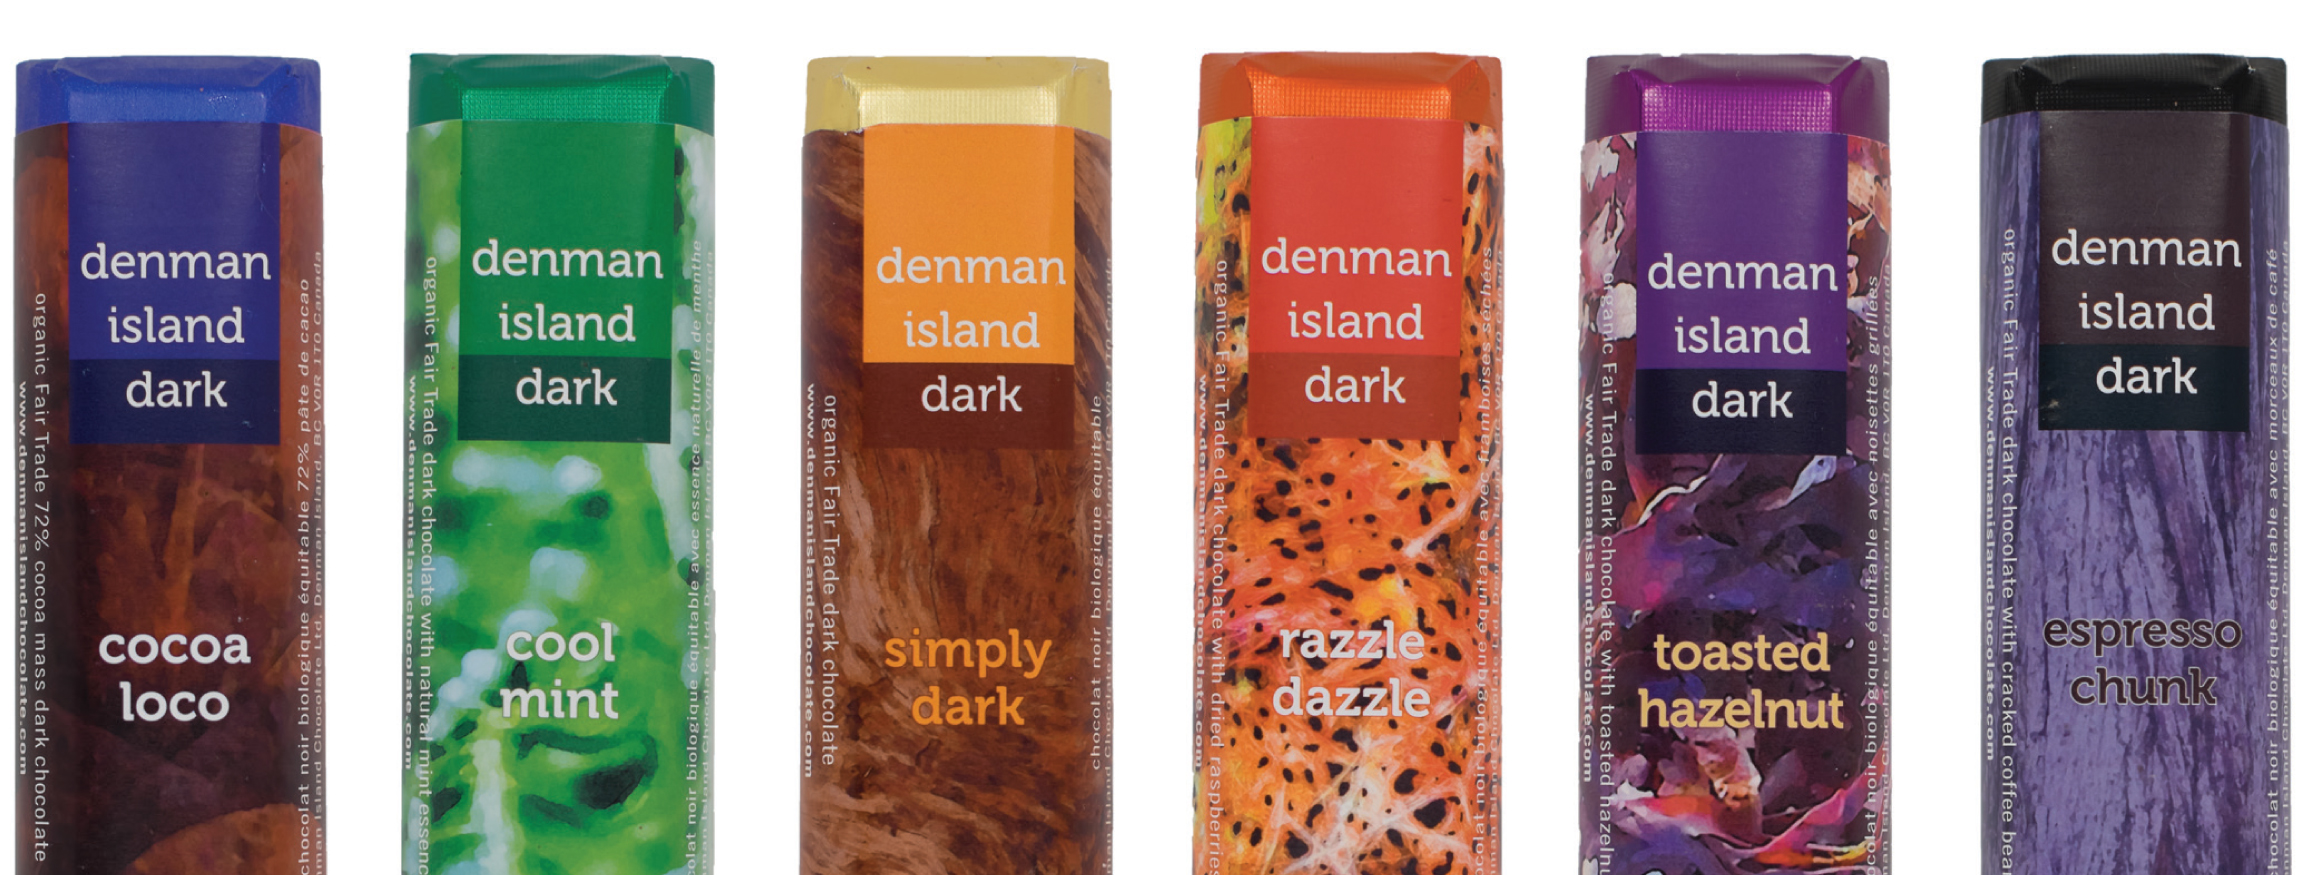 Denman Island Chocolate images